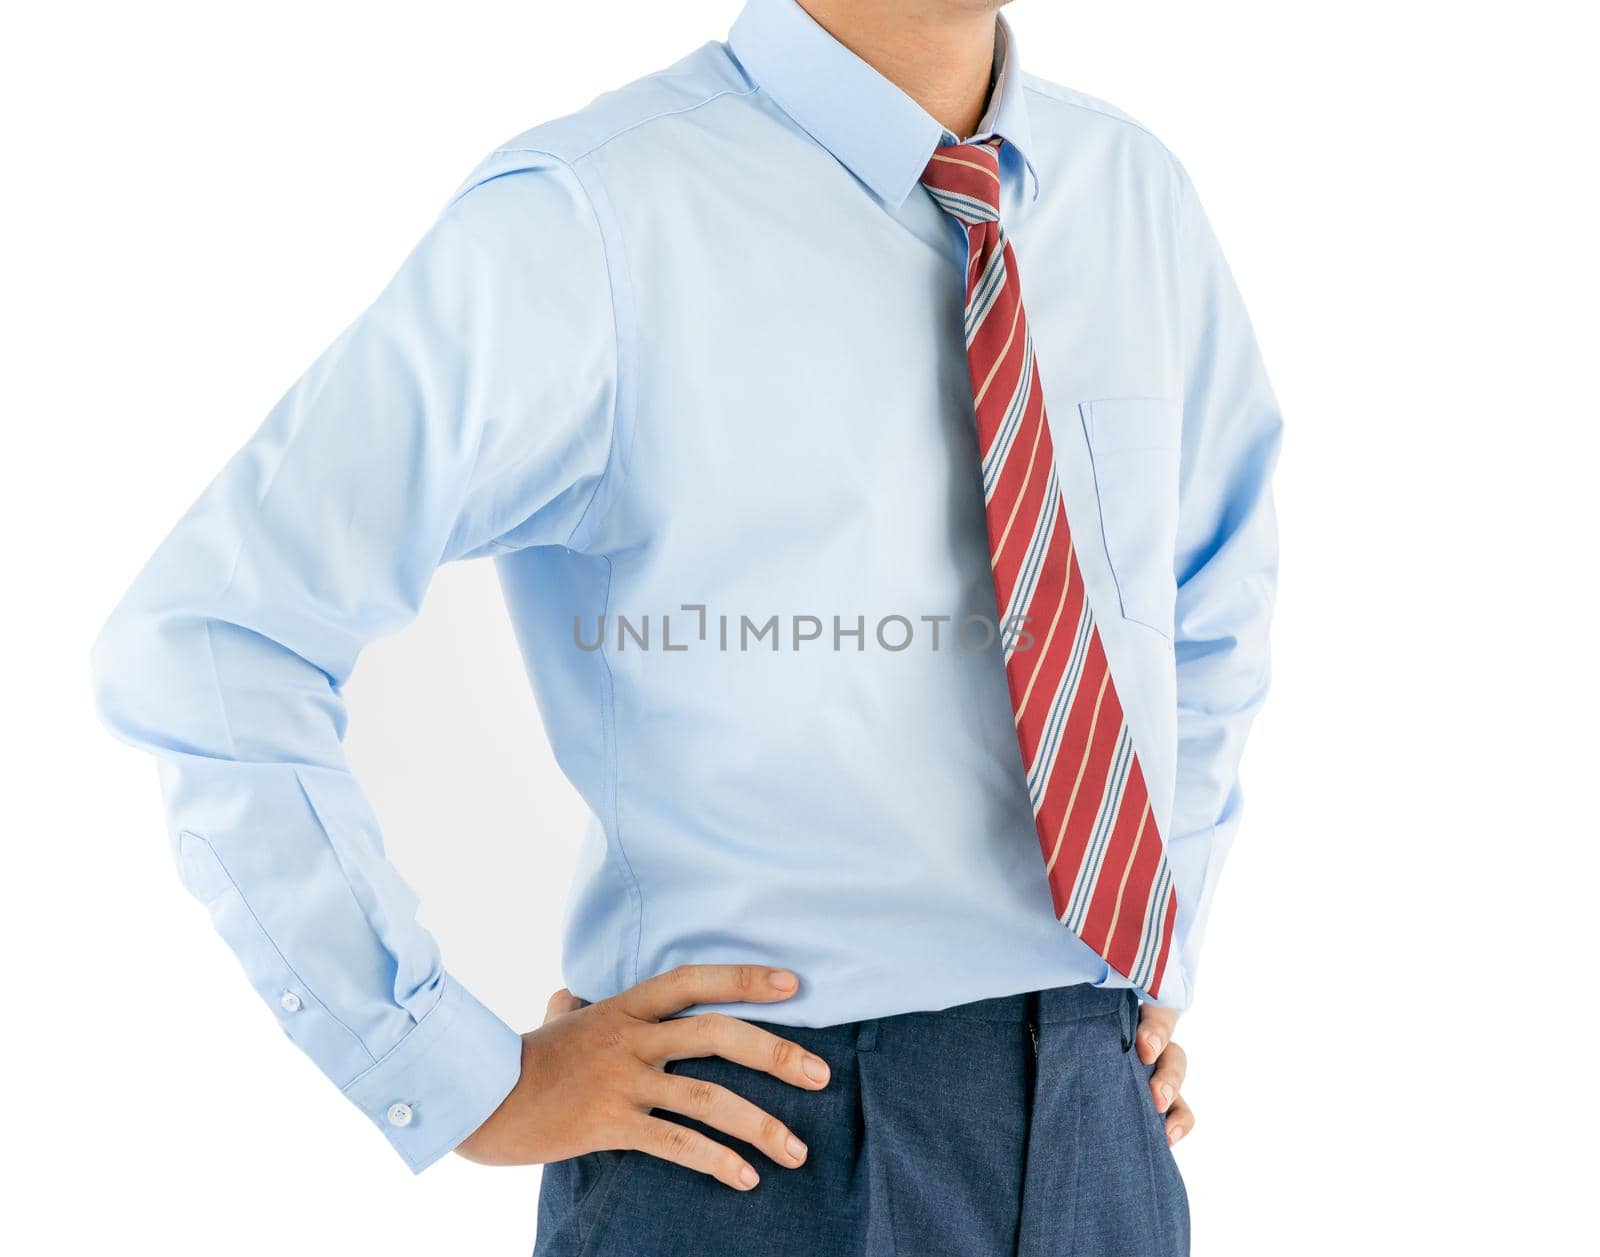 Man wear long sleeve shirt standing with akimbo studio shot isolated on white background